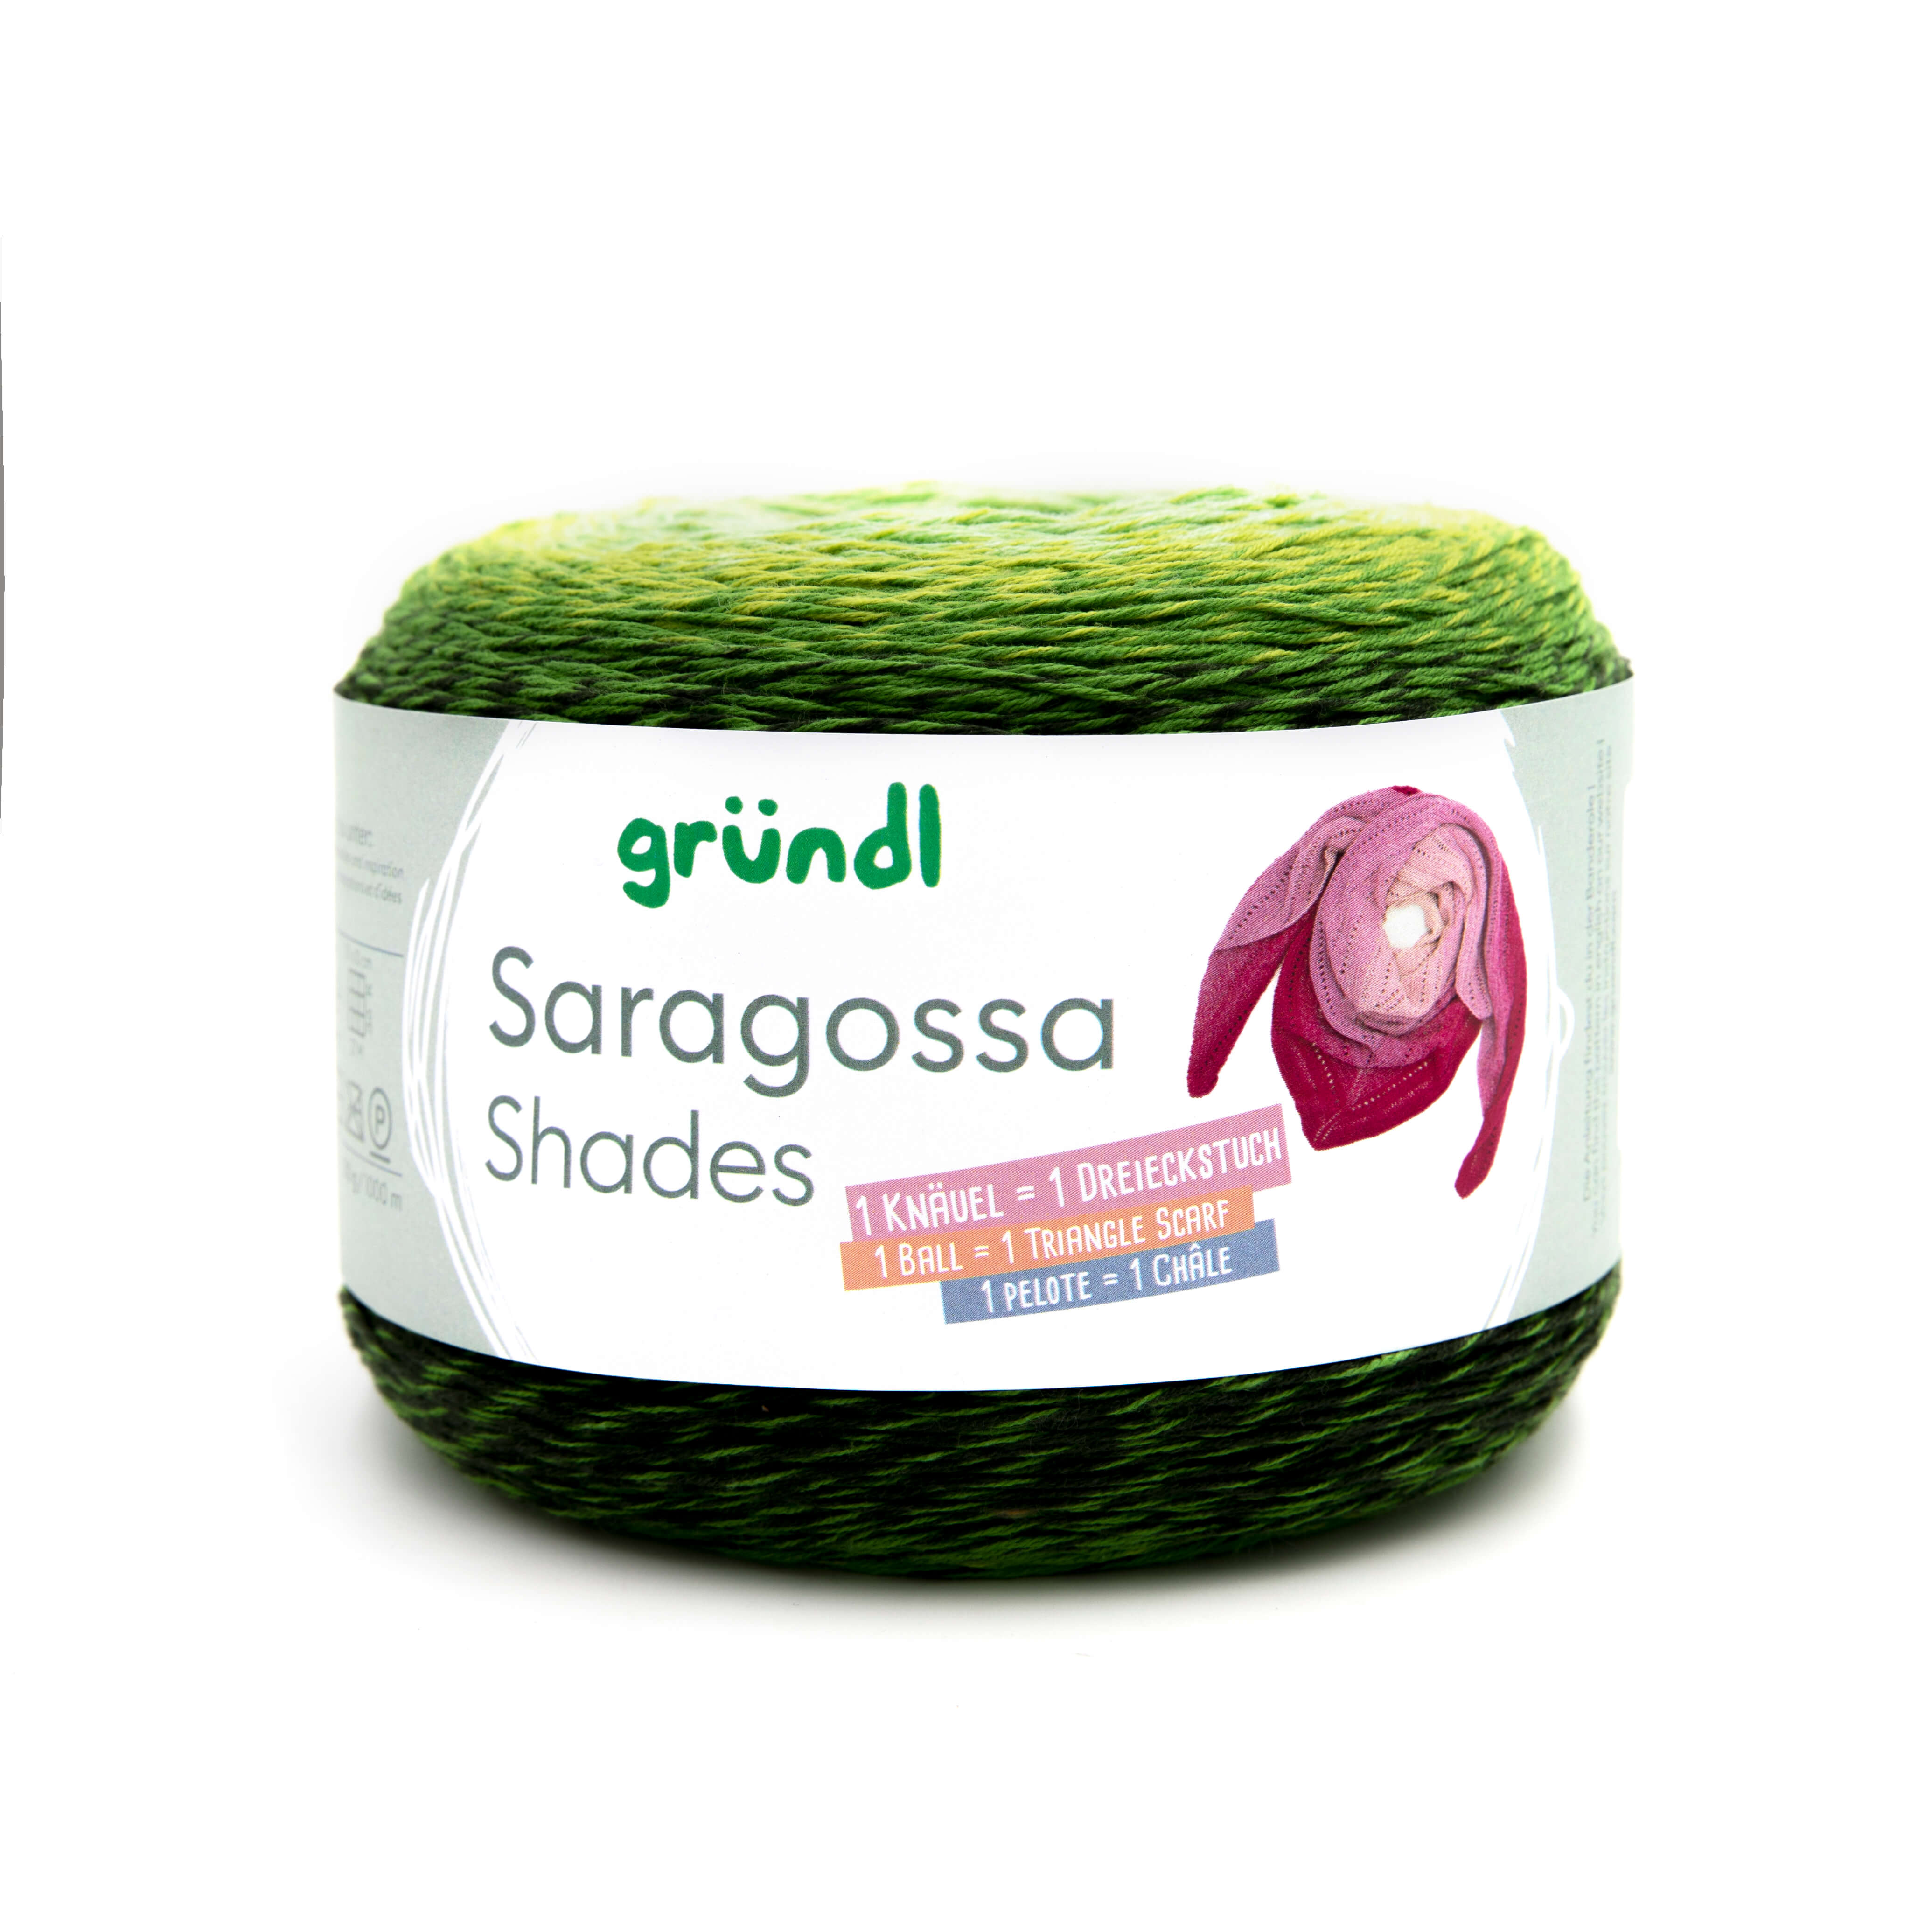 Saragossa Shades